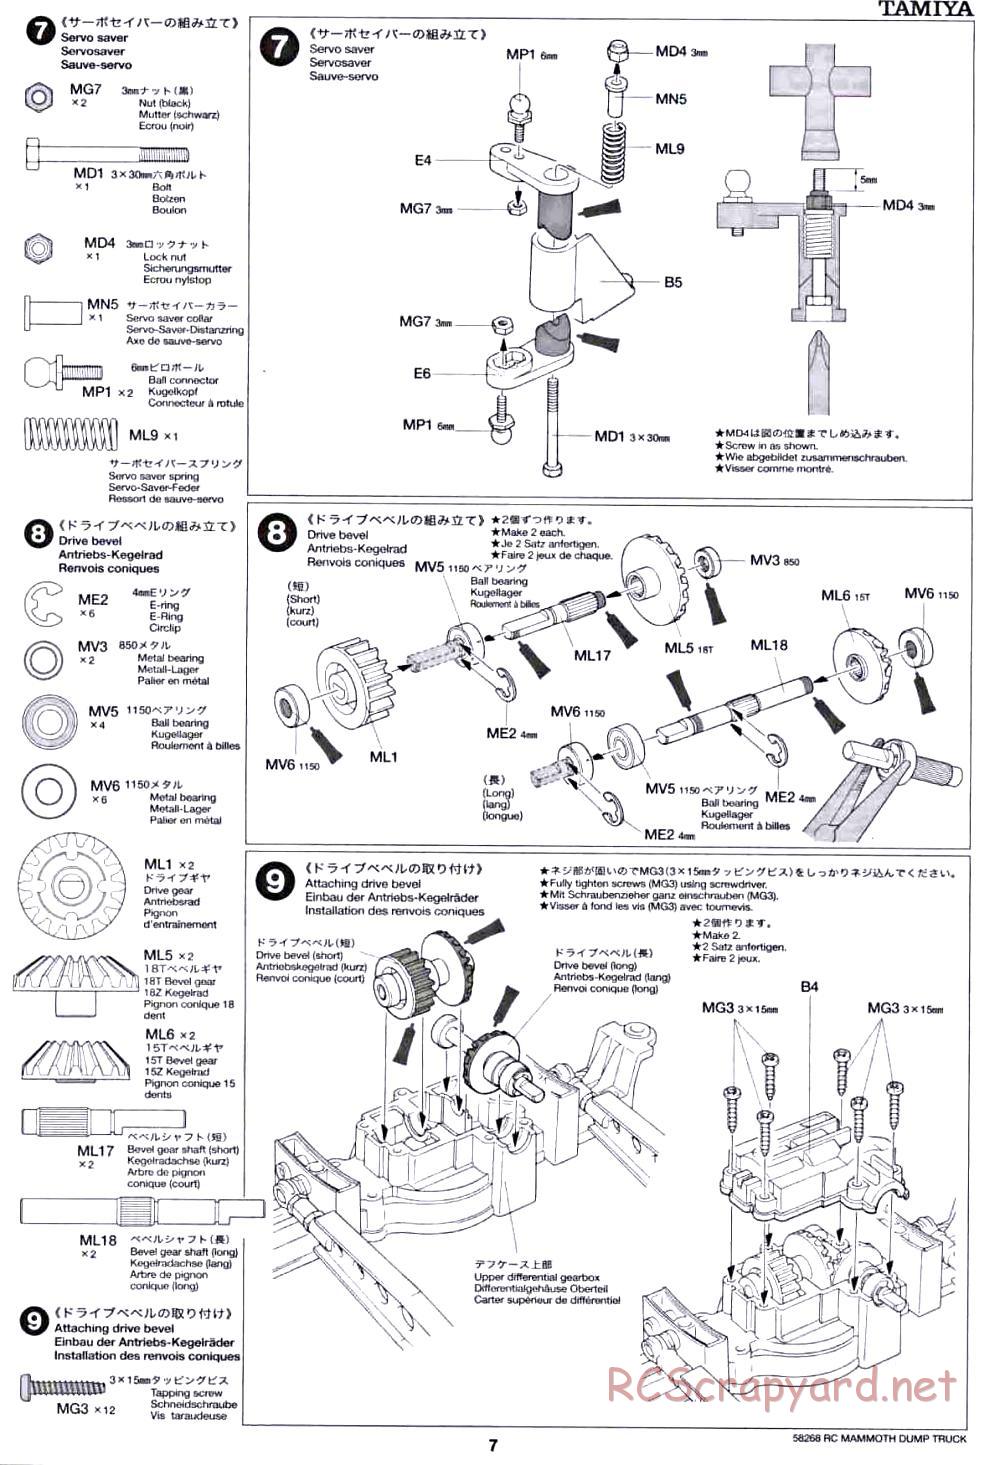 Tamiya - Mammoth Dump Truck Chassis - Manual - Page 7